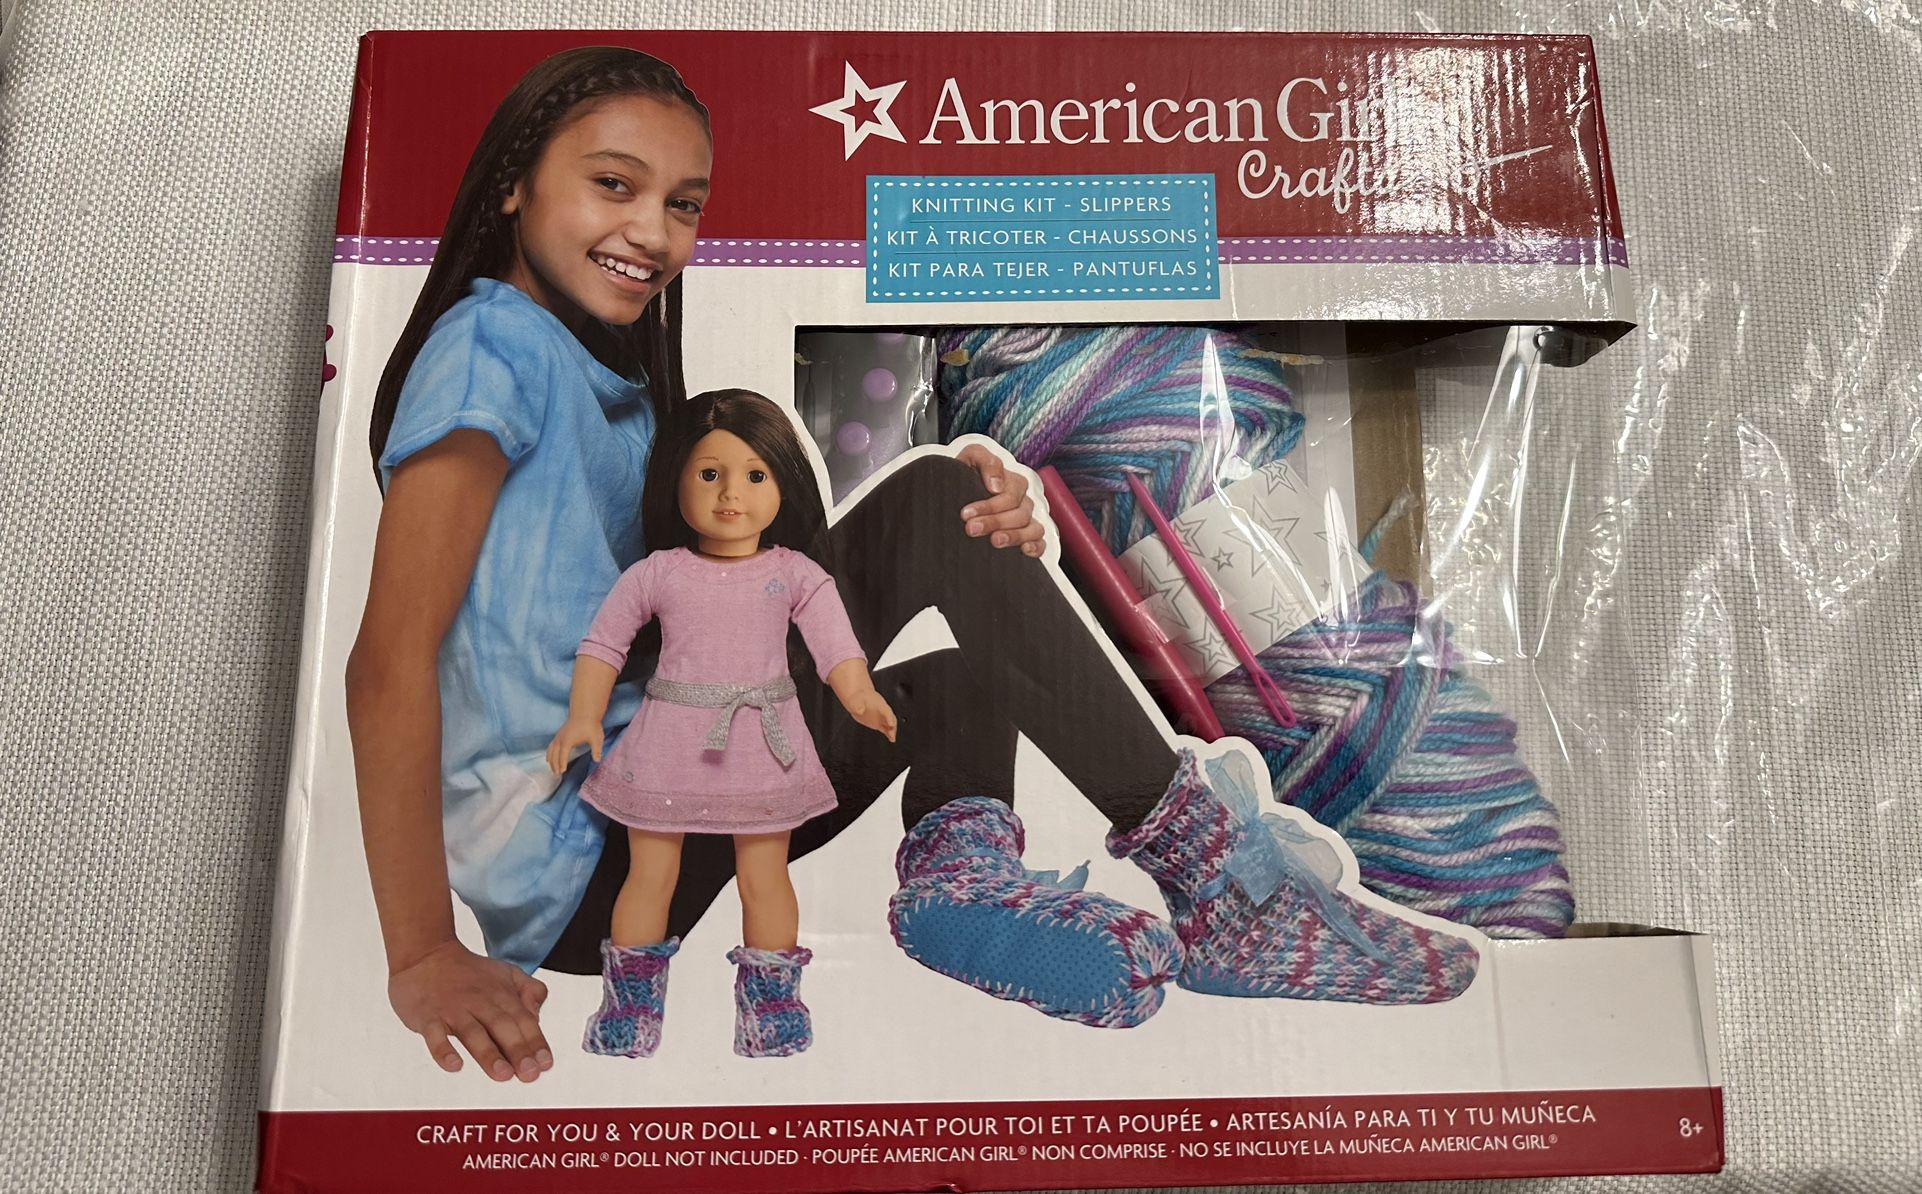 American Girl crafts Knitting slippers kite